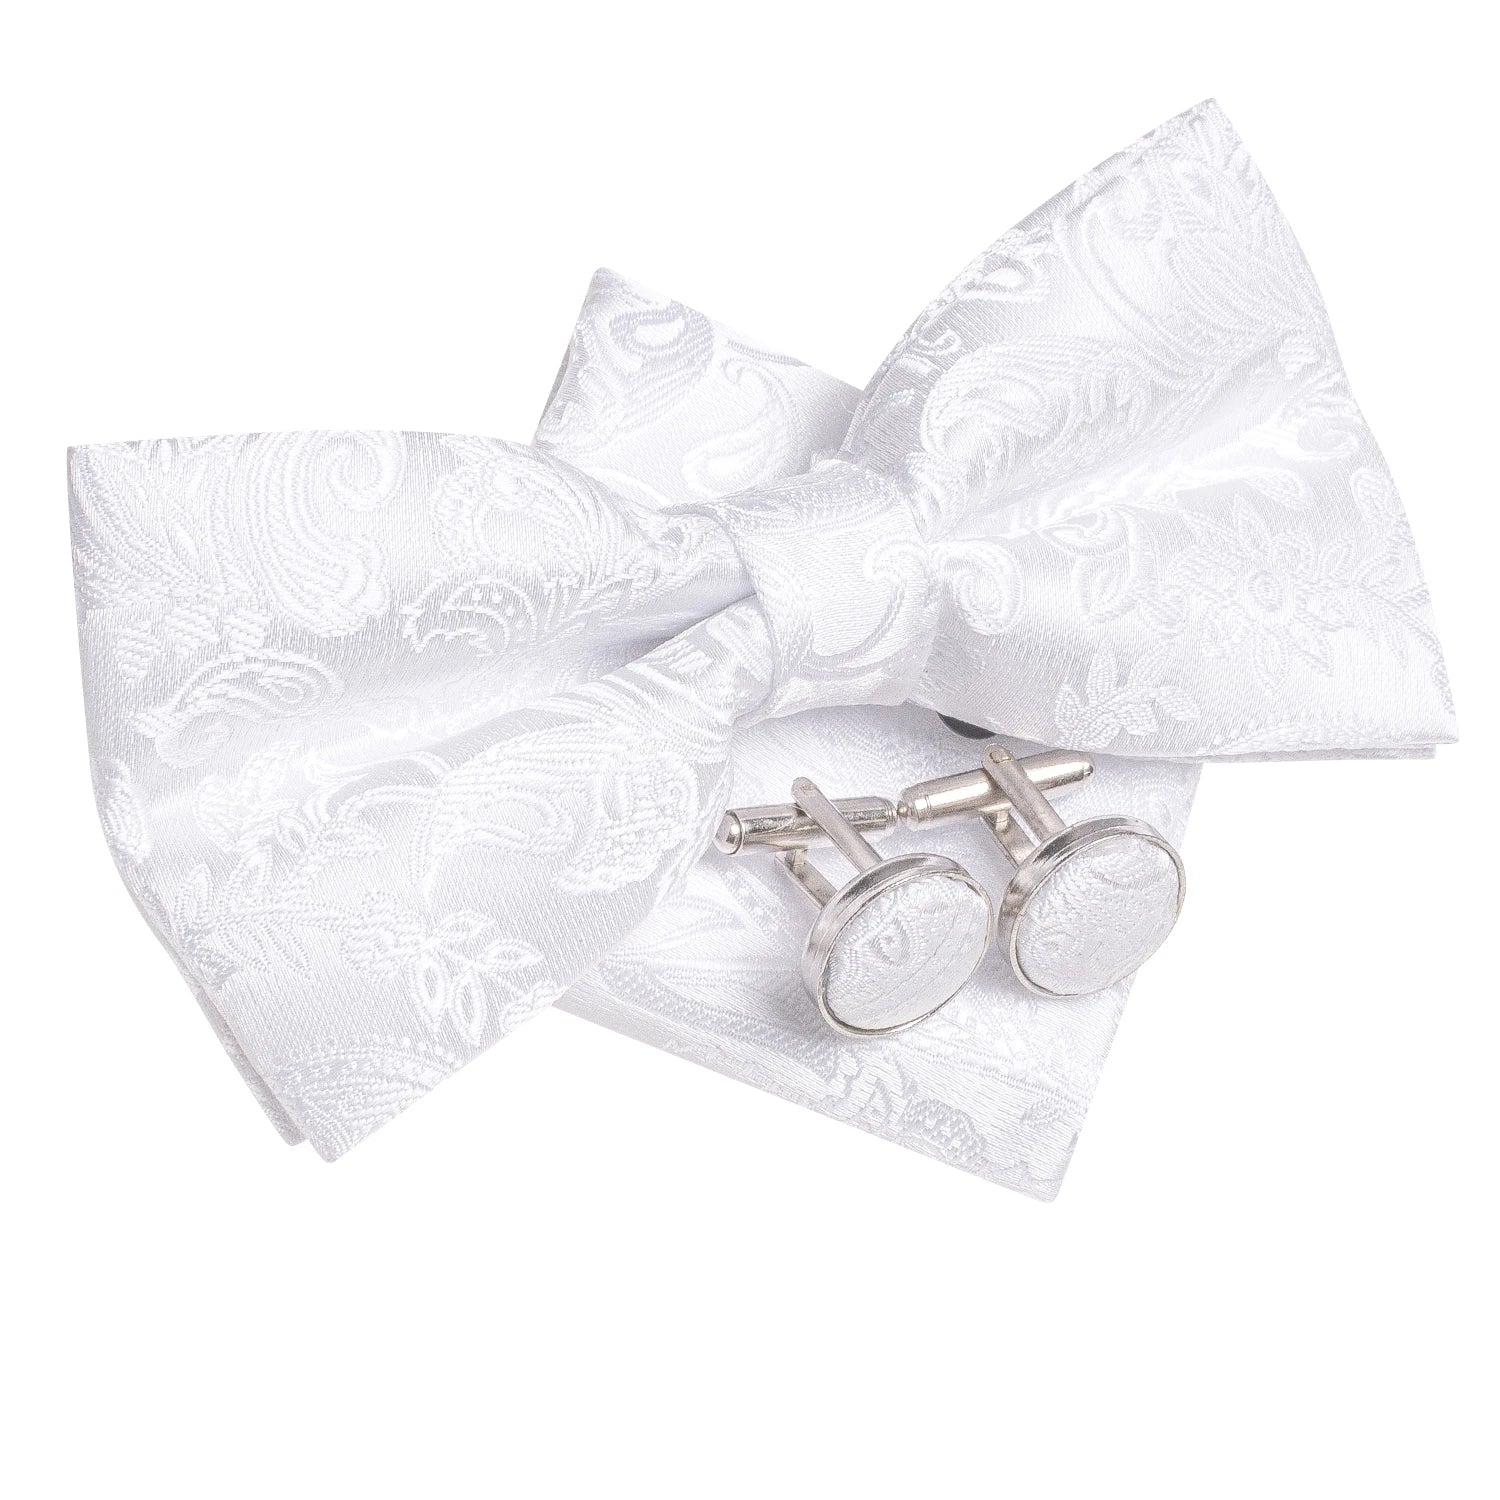 pre-wedding Hi-Tie White Black Gray Silver Silk Mens Bow Tie Hanky Cufflinks Set Pre-tied Butterfly Knot Bowtie for Male Wedding Business